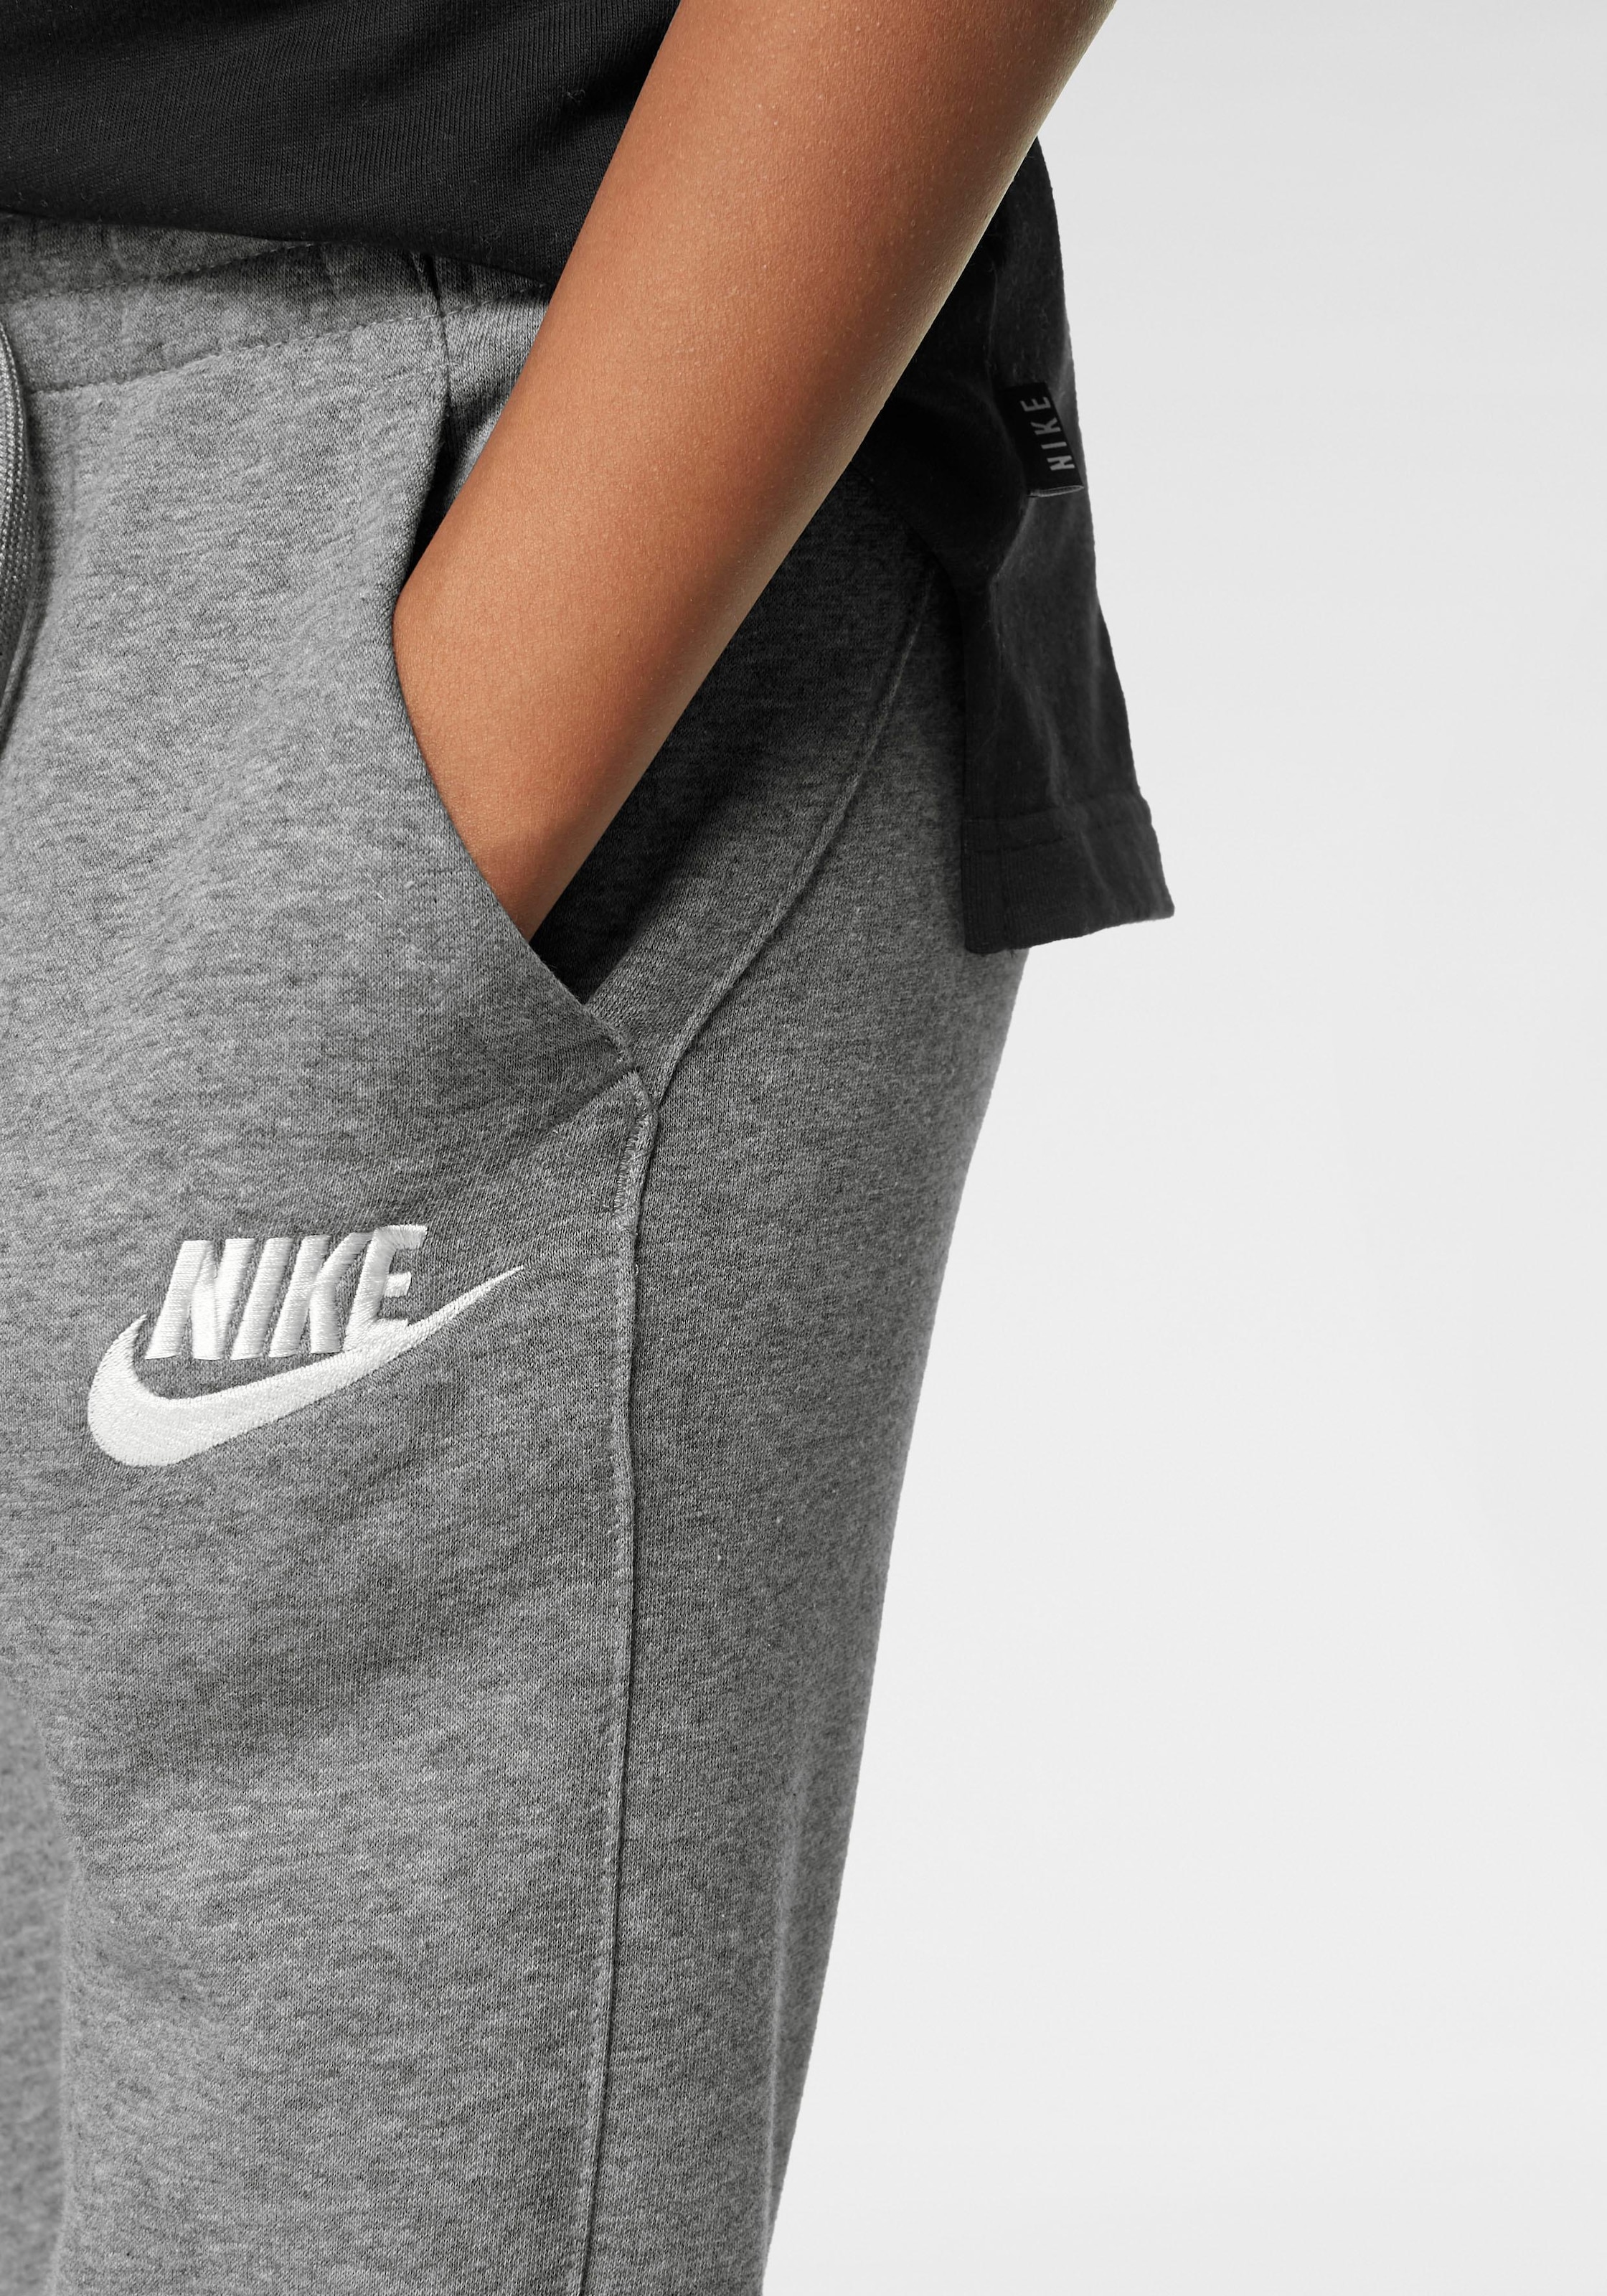 100 % authentisch garantiert! Finde Nike Sportswear Jogginghose »B CLUB JOGGER PANT« auf FLEECE NSW